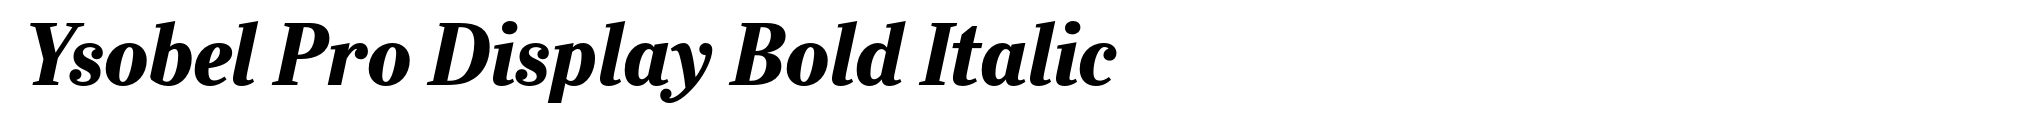 Ysobel Pro Display Bold Italic image